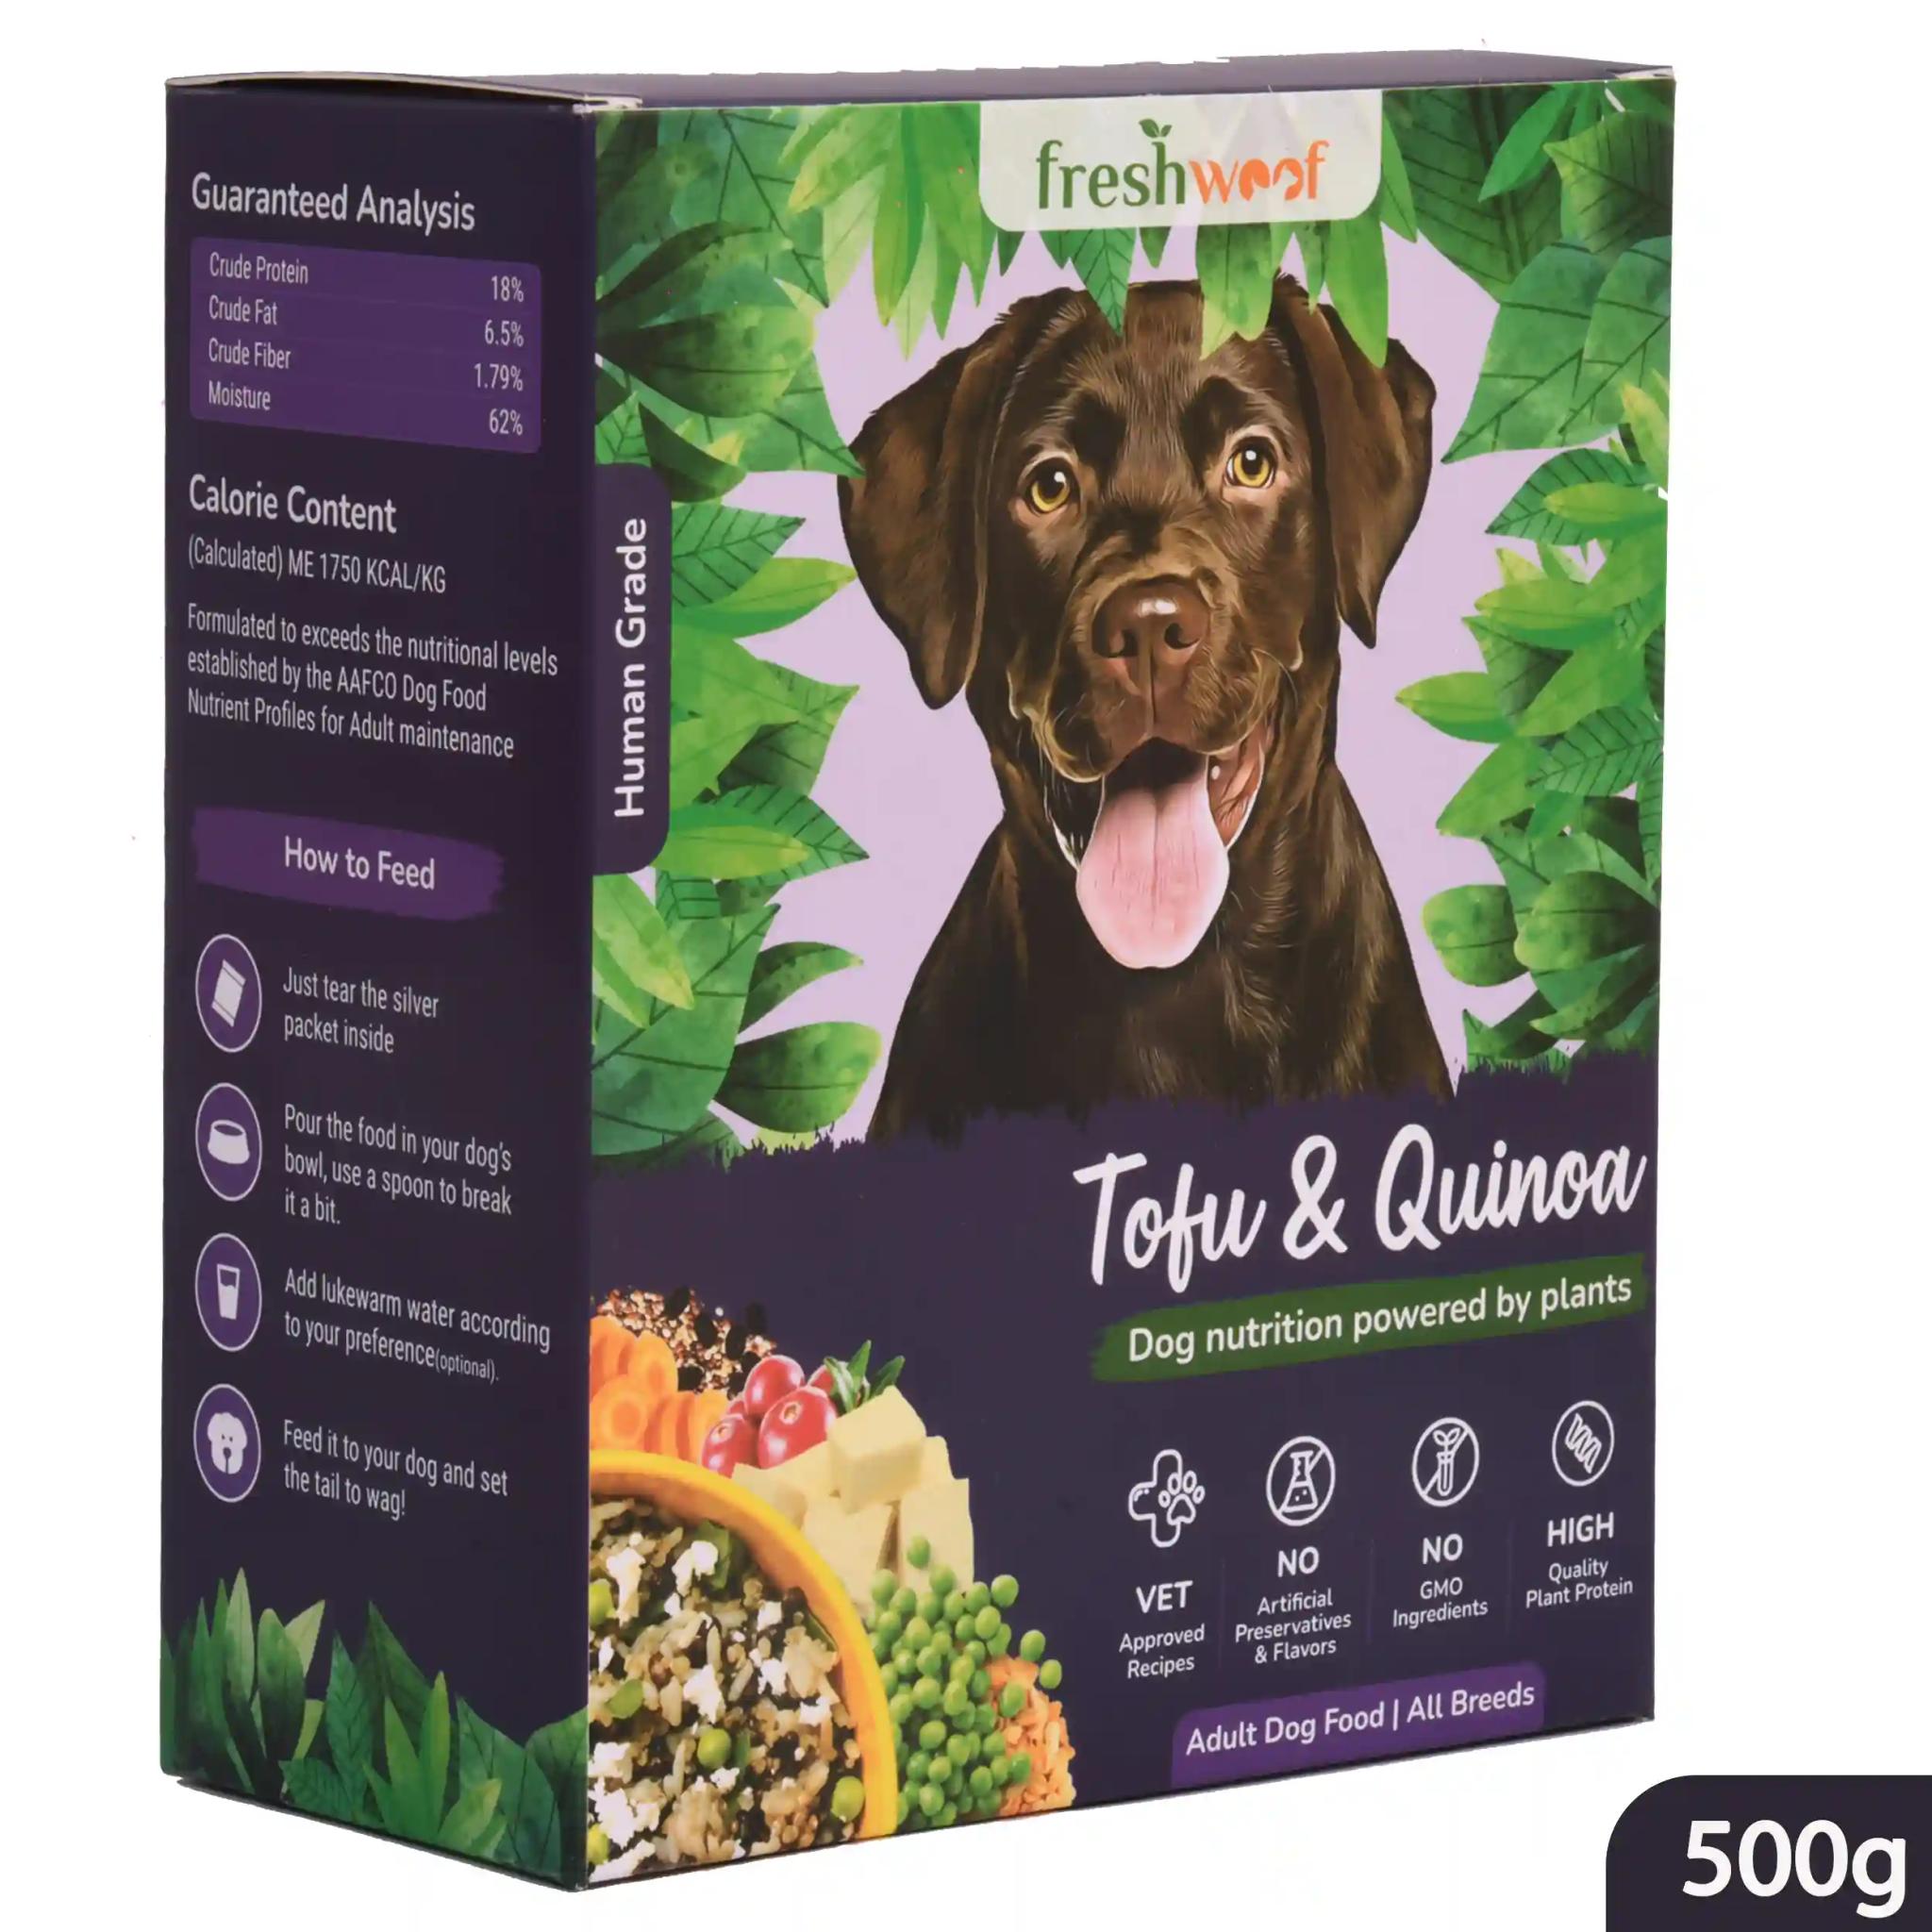 All Natural Vegetarian/Vegan Wet Dog Food - Tofu & Quinoa